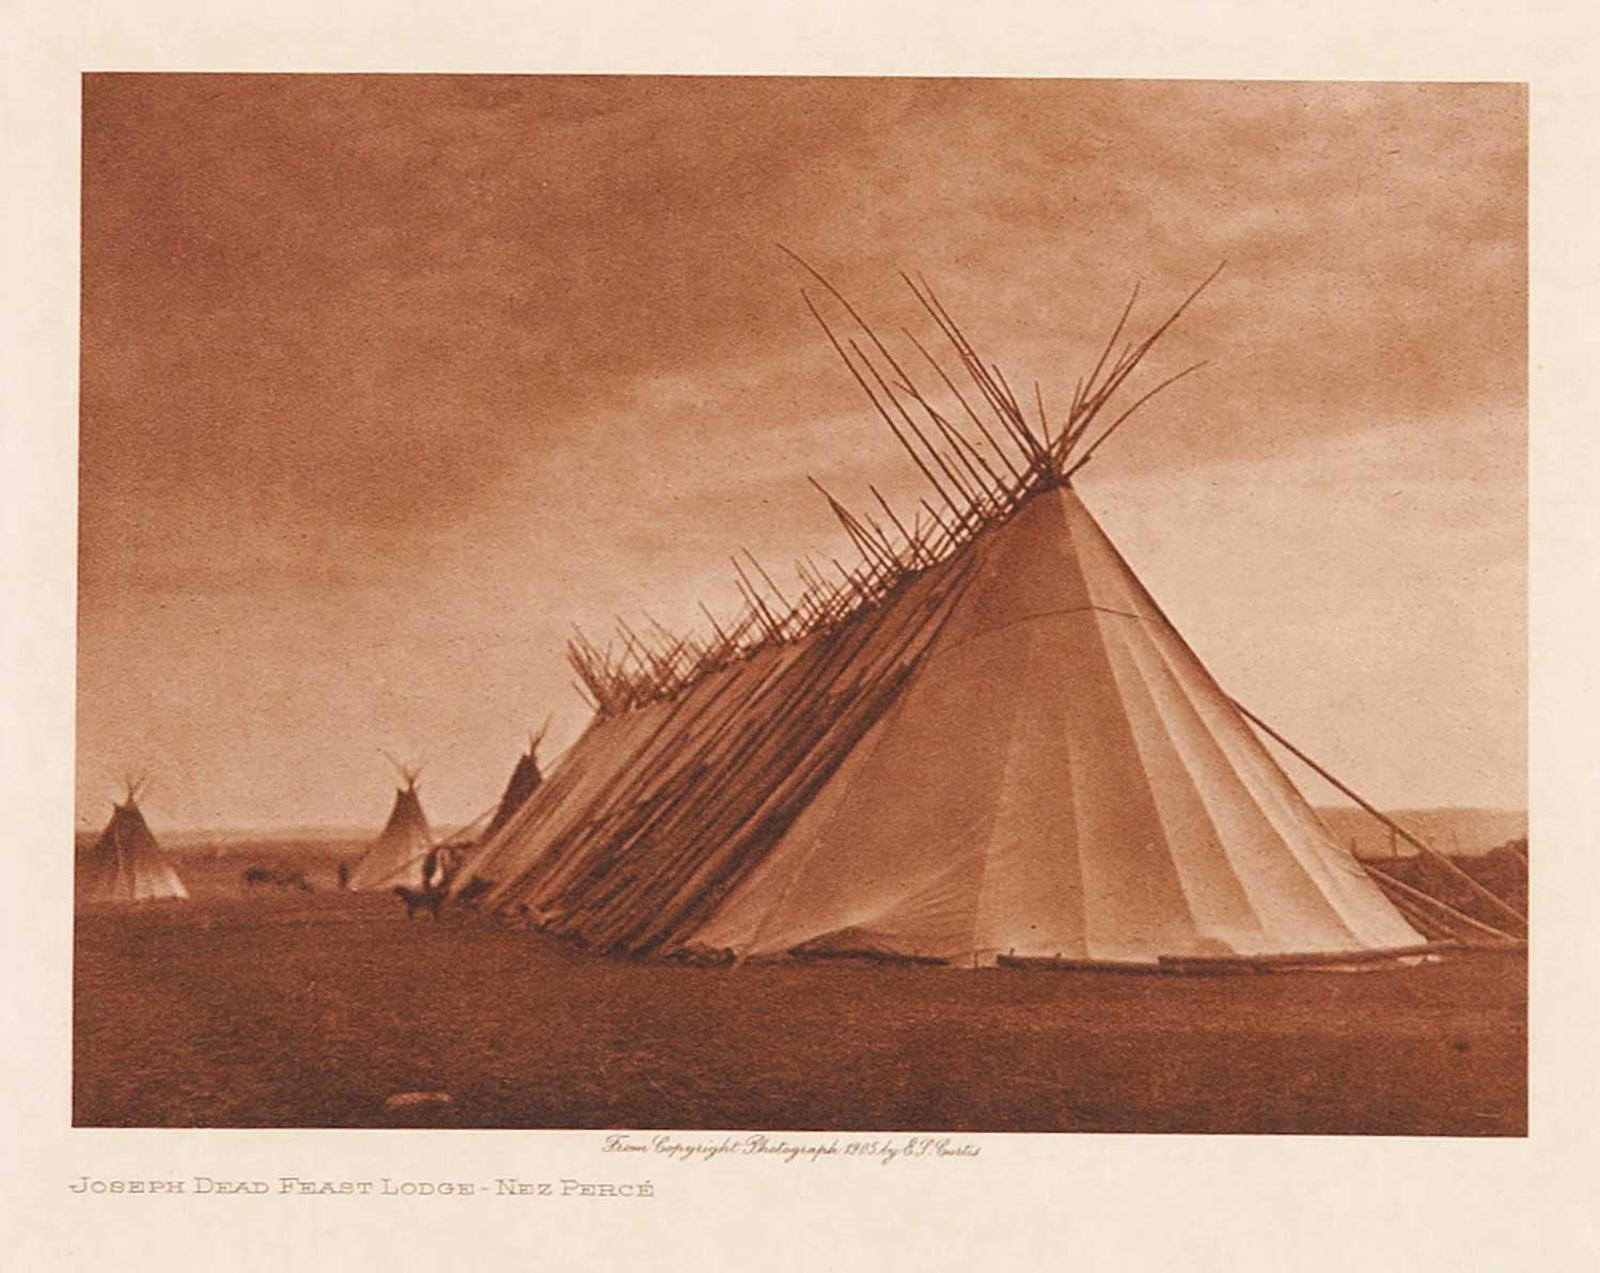 Edward Sherrif Curtis (1868-1952) - Joseph Dead Feast Lodge - Nez Perce